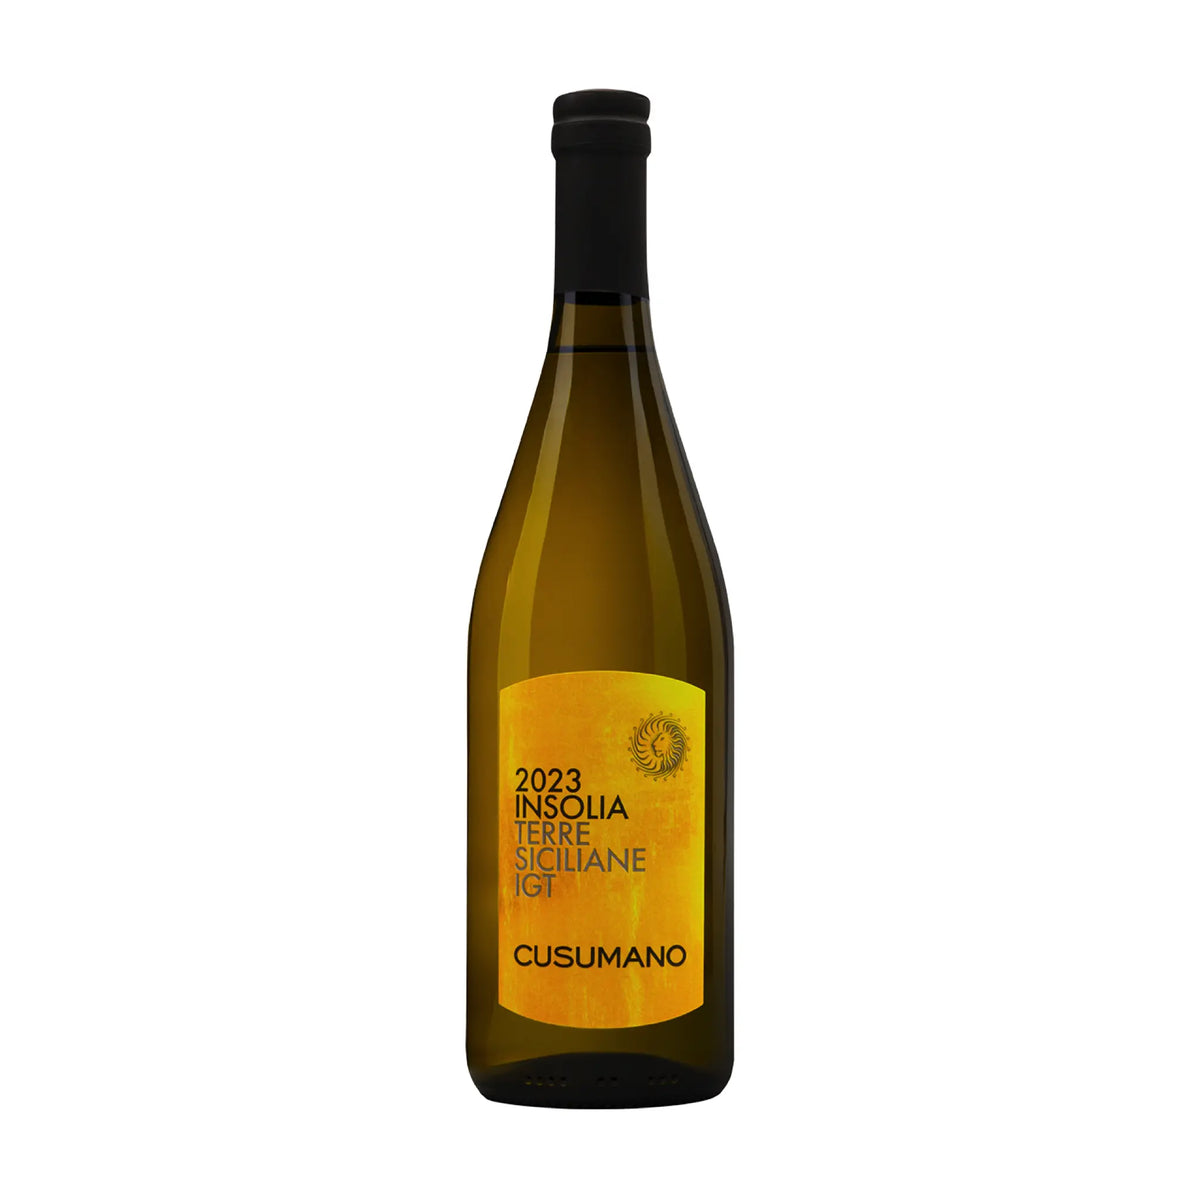 Cusumano-Weißwein-Ansonica-Italien-Sizilien-2023 Terre Siciliane Insolia IGT-WINECOM